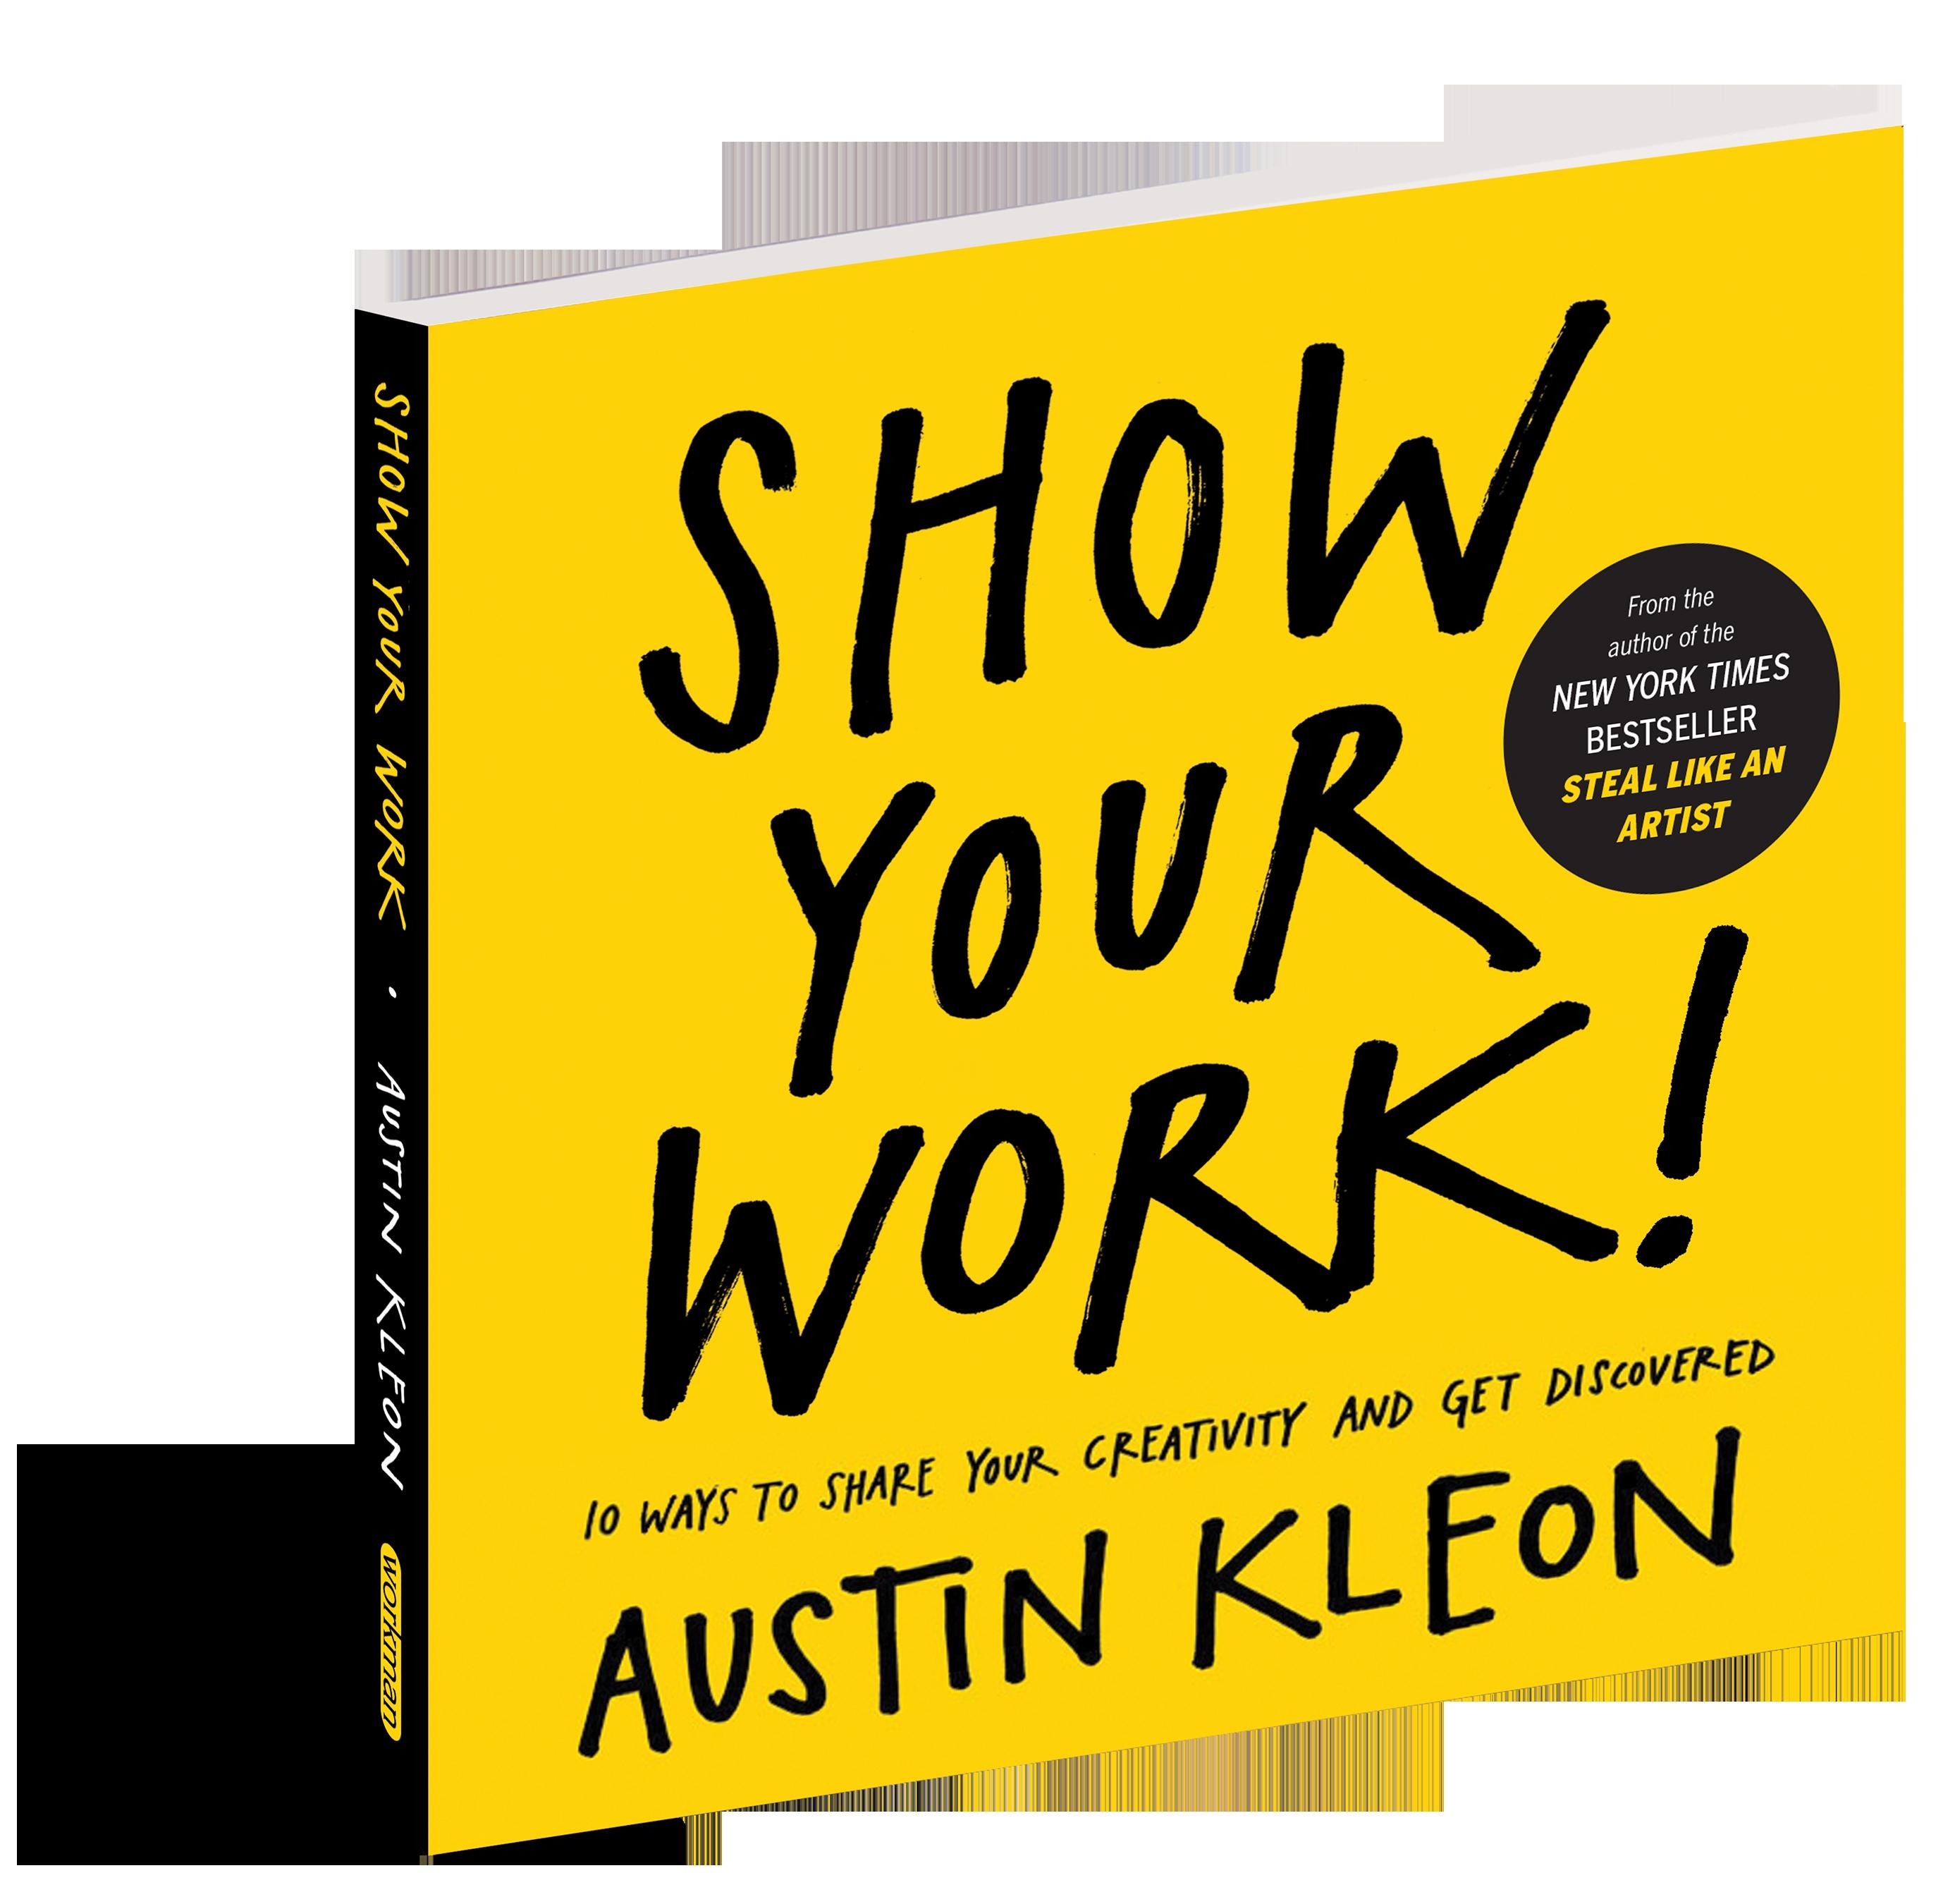 The author new book. Steal like an artist Austin Kleon. Show your work!: 10 Ways to share your creativity and get discovered by Austin Kleon. Show your work Austin Kleon. Остин Клеон книги.